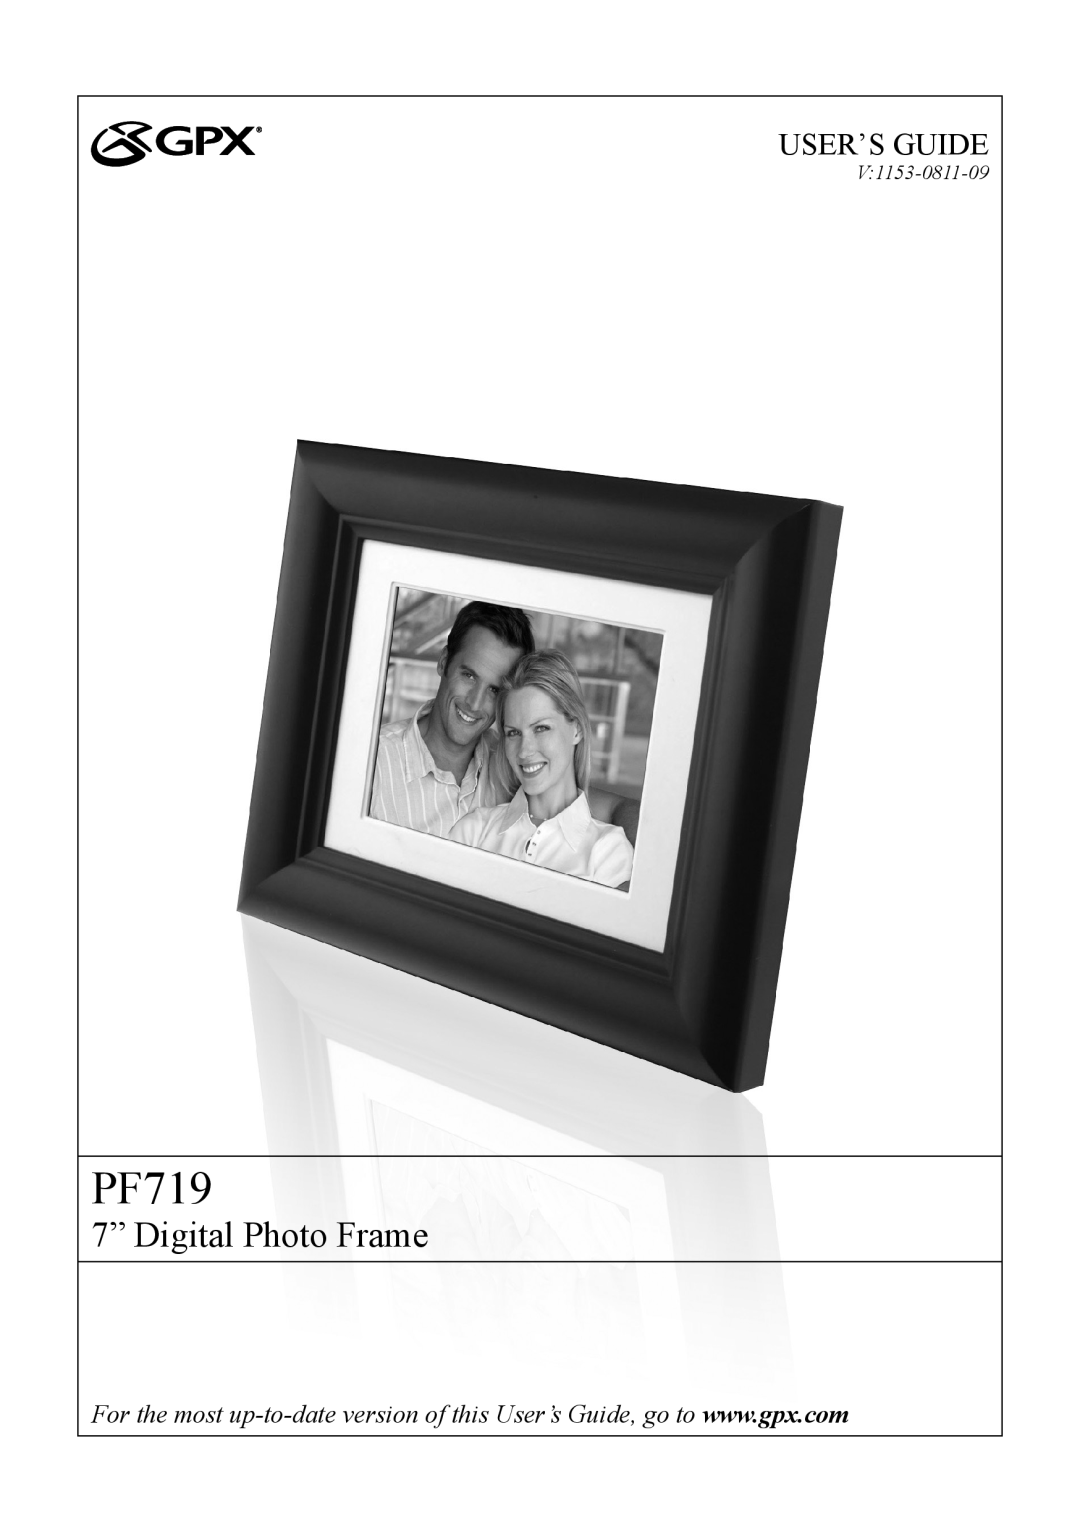 GPX PF719 manual 7” Digital Photo Frame, User’S Guide, V1153-0811-09 